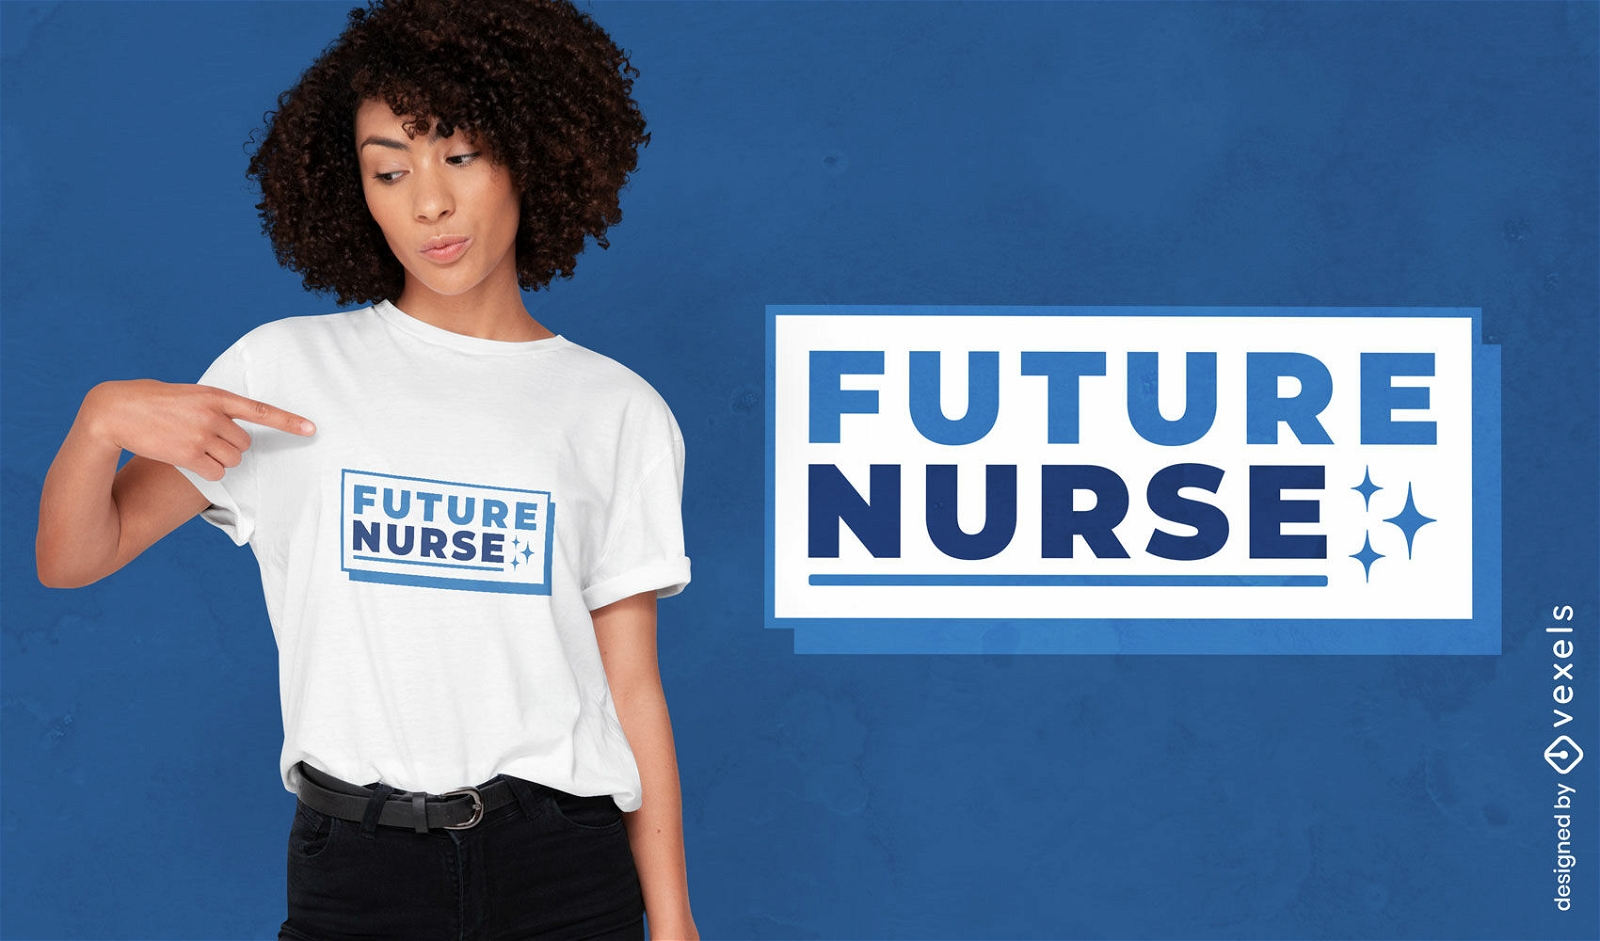 Future nurse t-shirt design